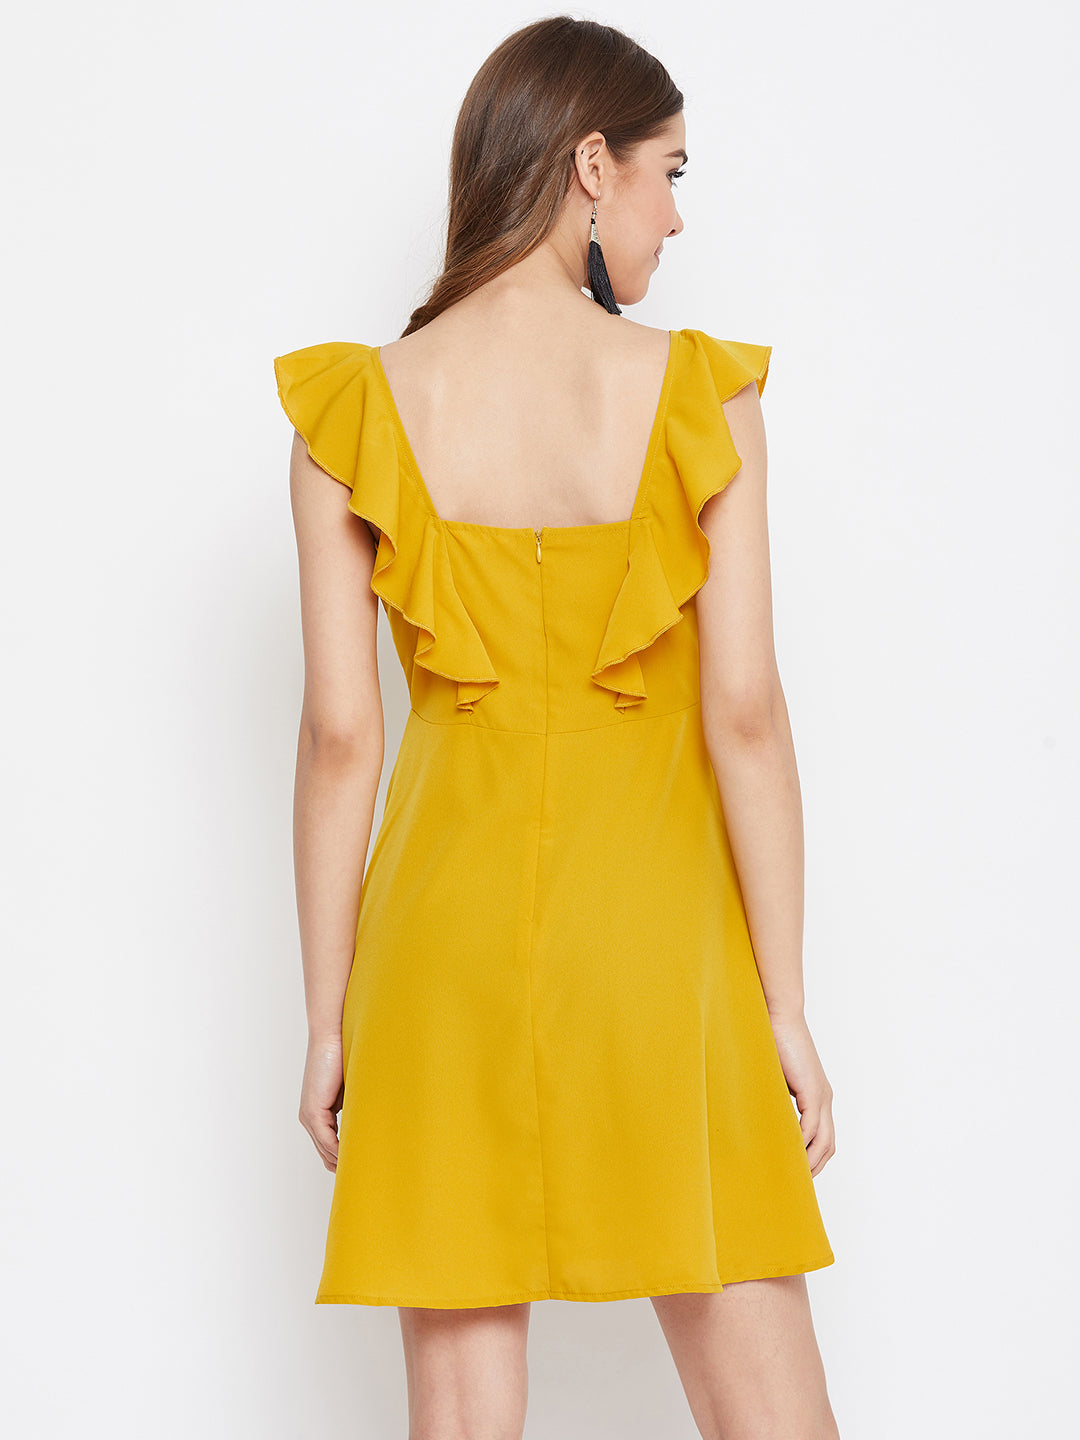 Berrylush Women Solid Mustard Yellow Sleeveless Ruffled Fit & Flare Mini Dress